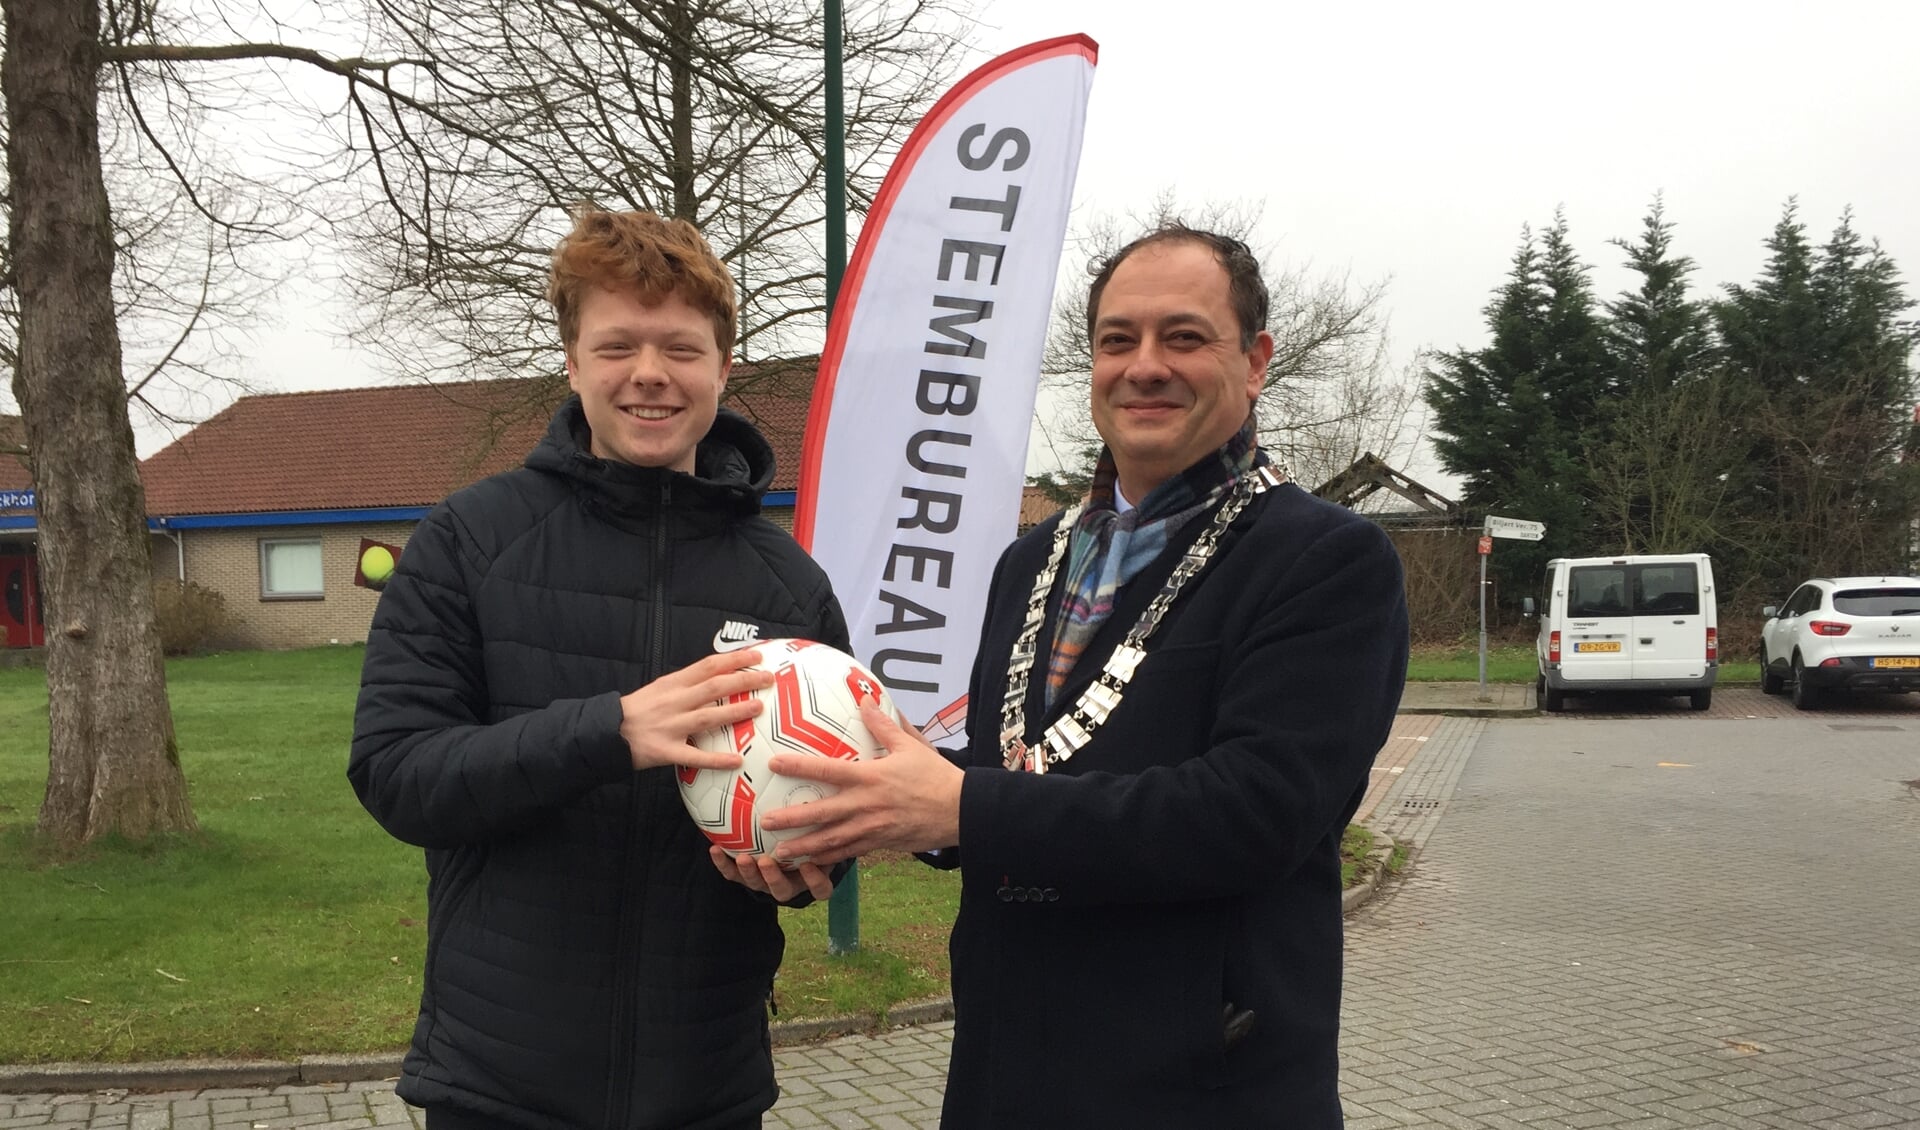 Tom Smeding kreeg een voetbal van burgemeester Gerolf Bouwmeester.